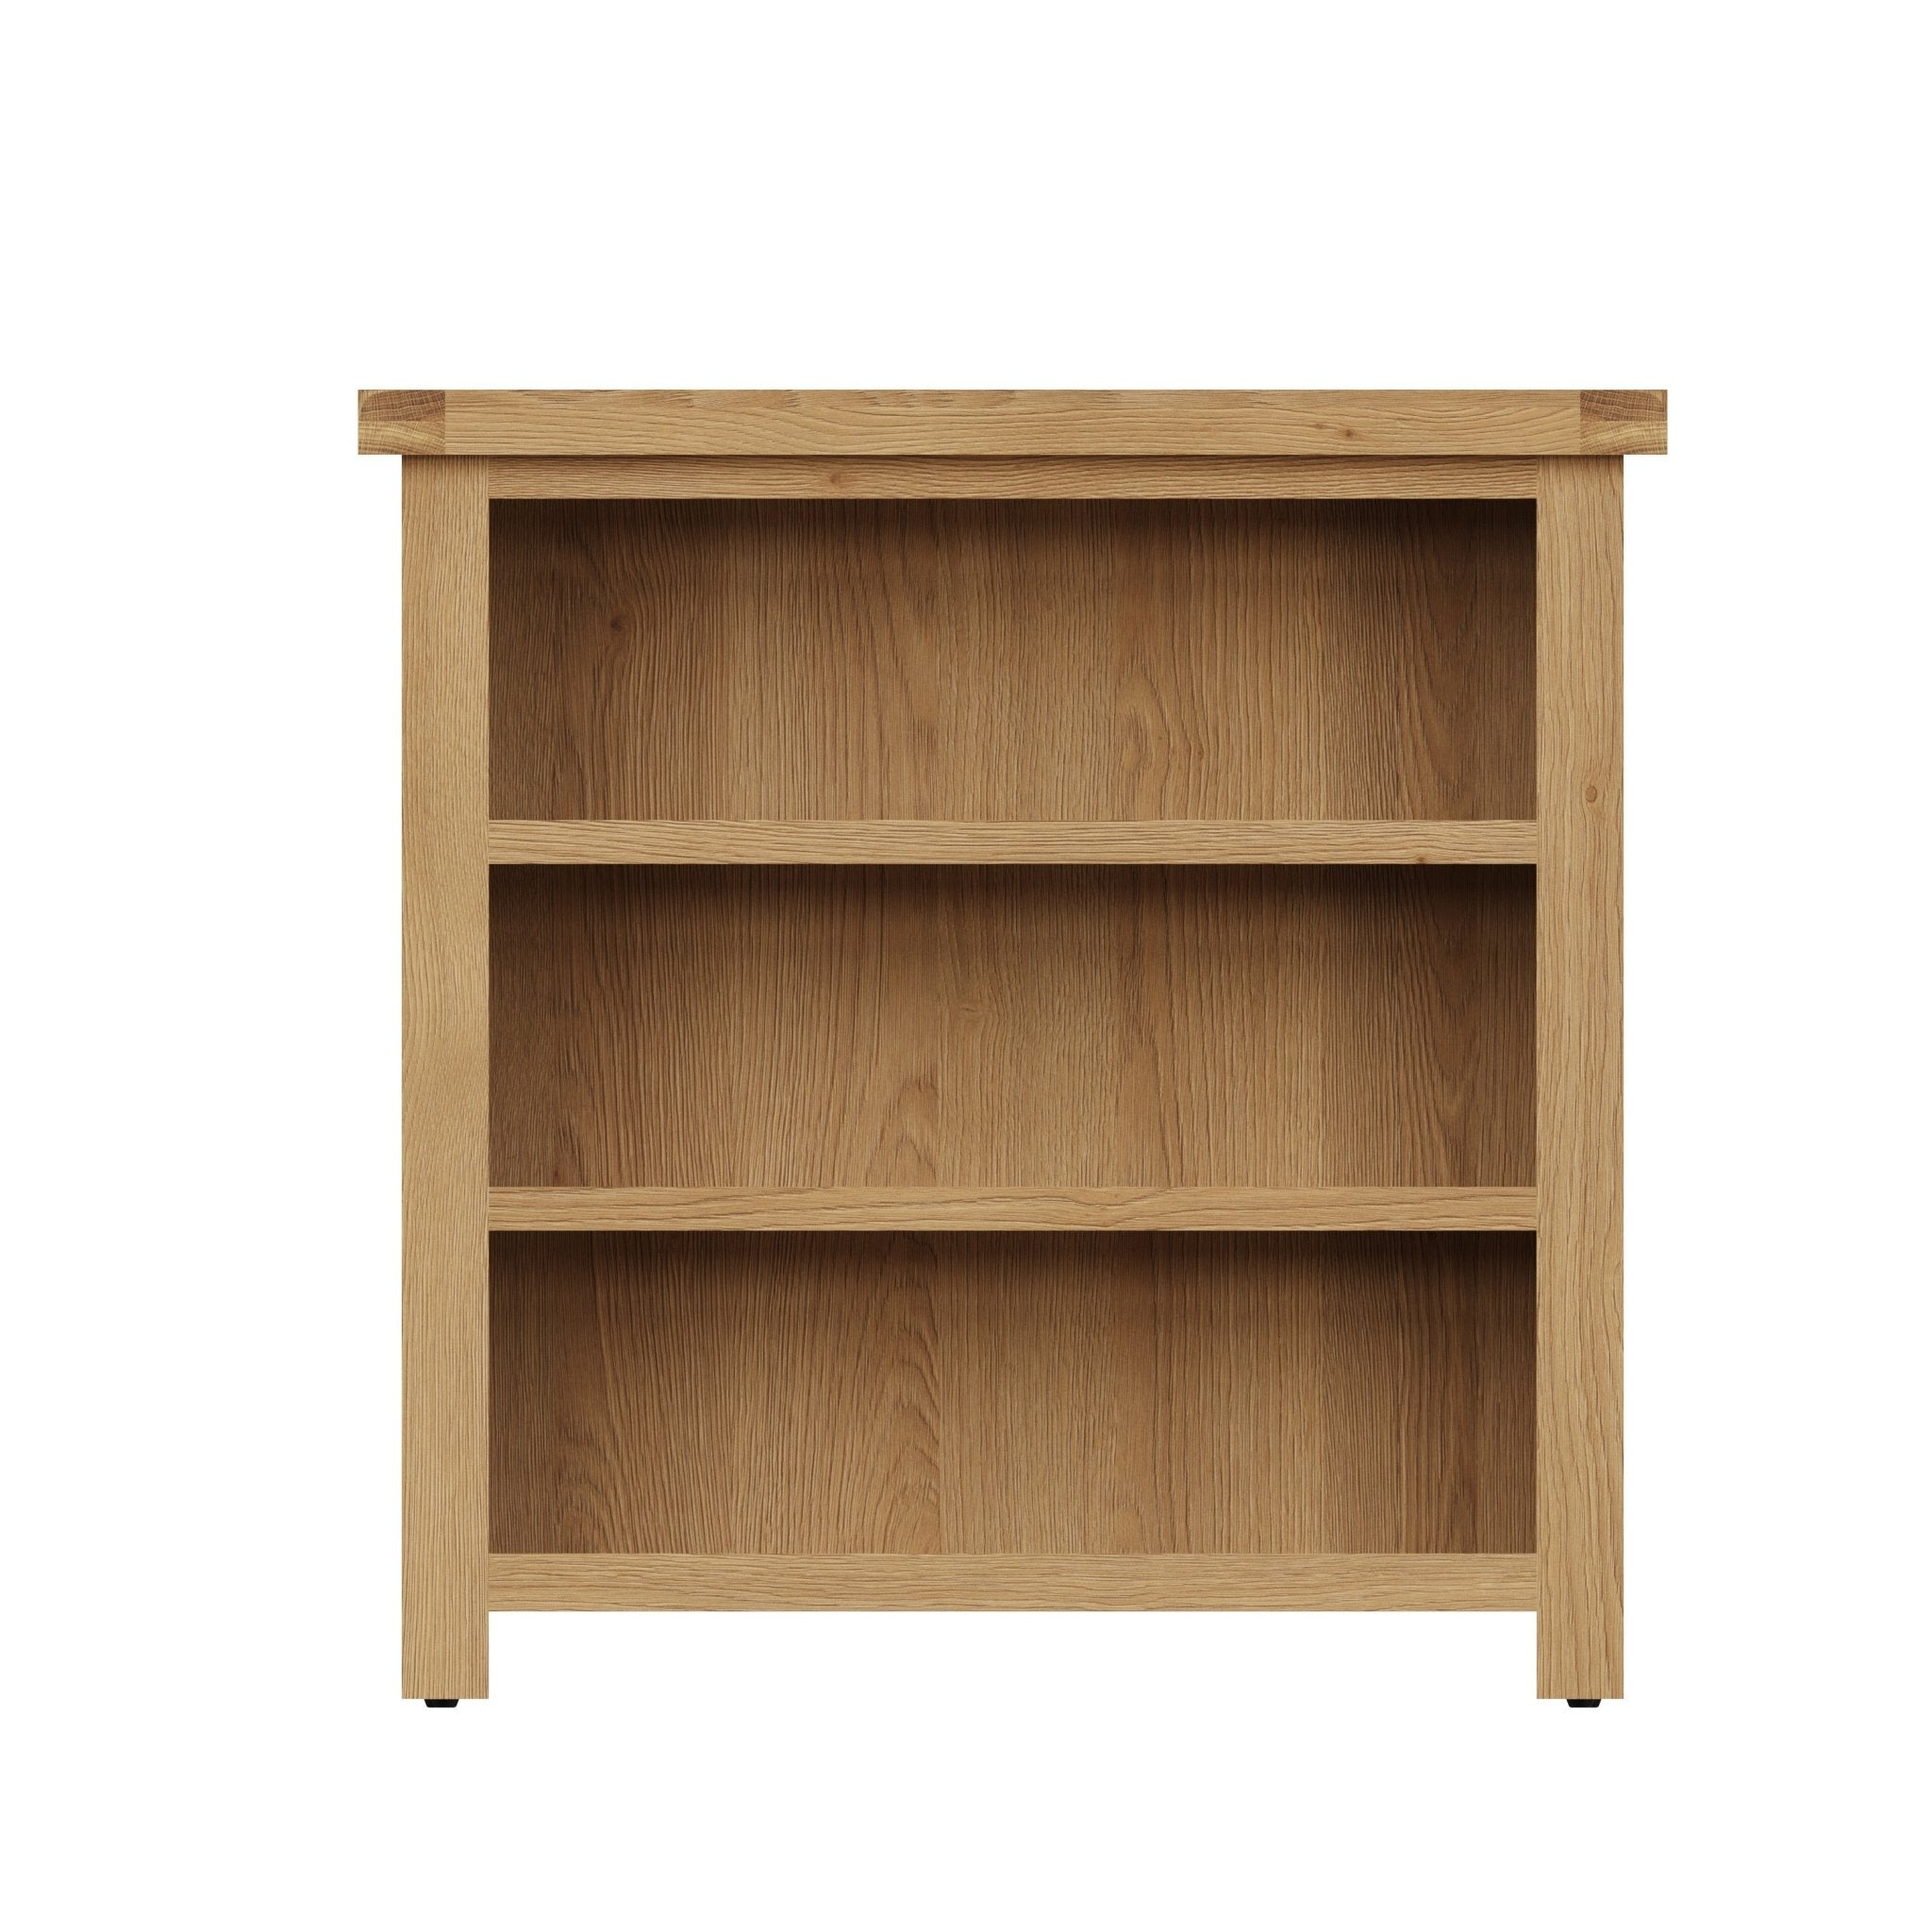 Kirdford Oak Wooden Small Bookcase - Duck Barn Interiors